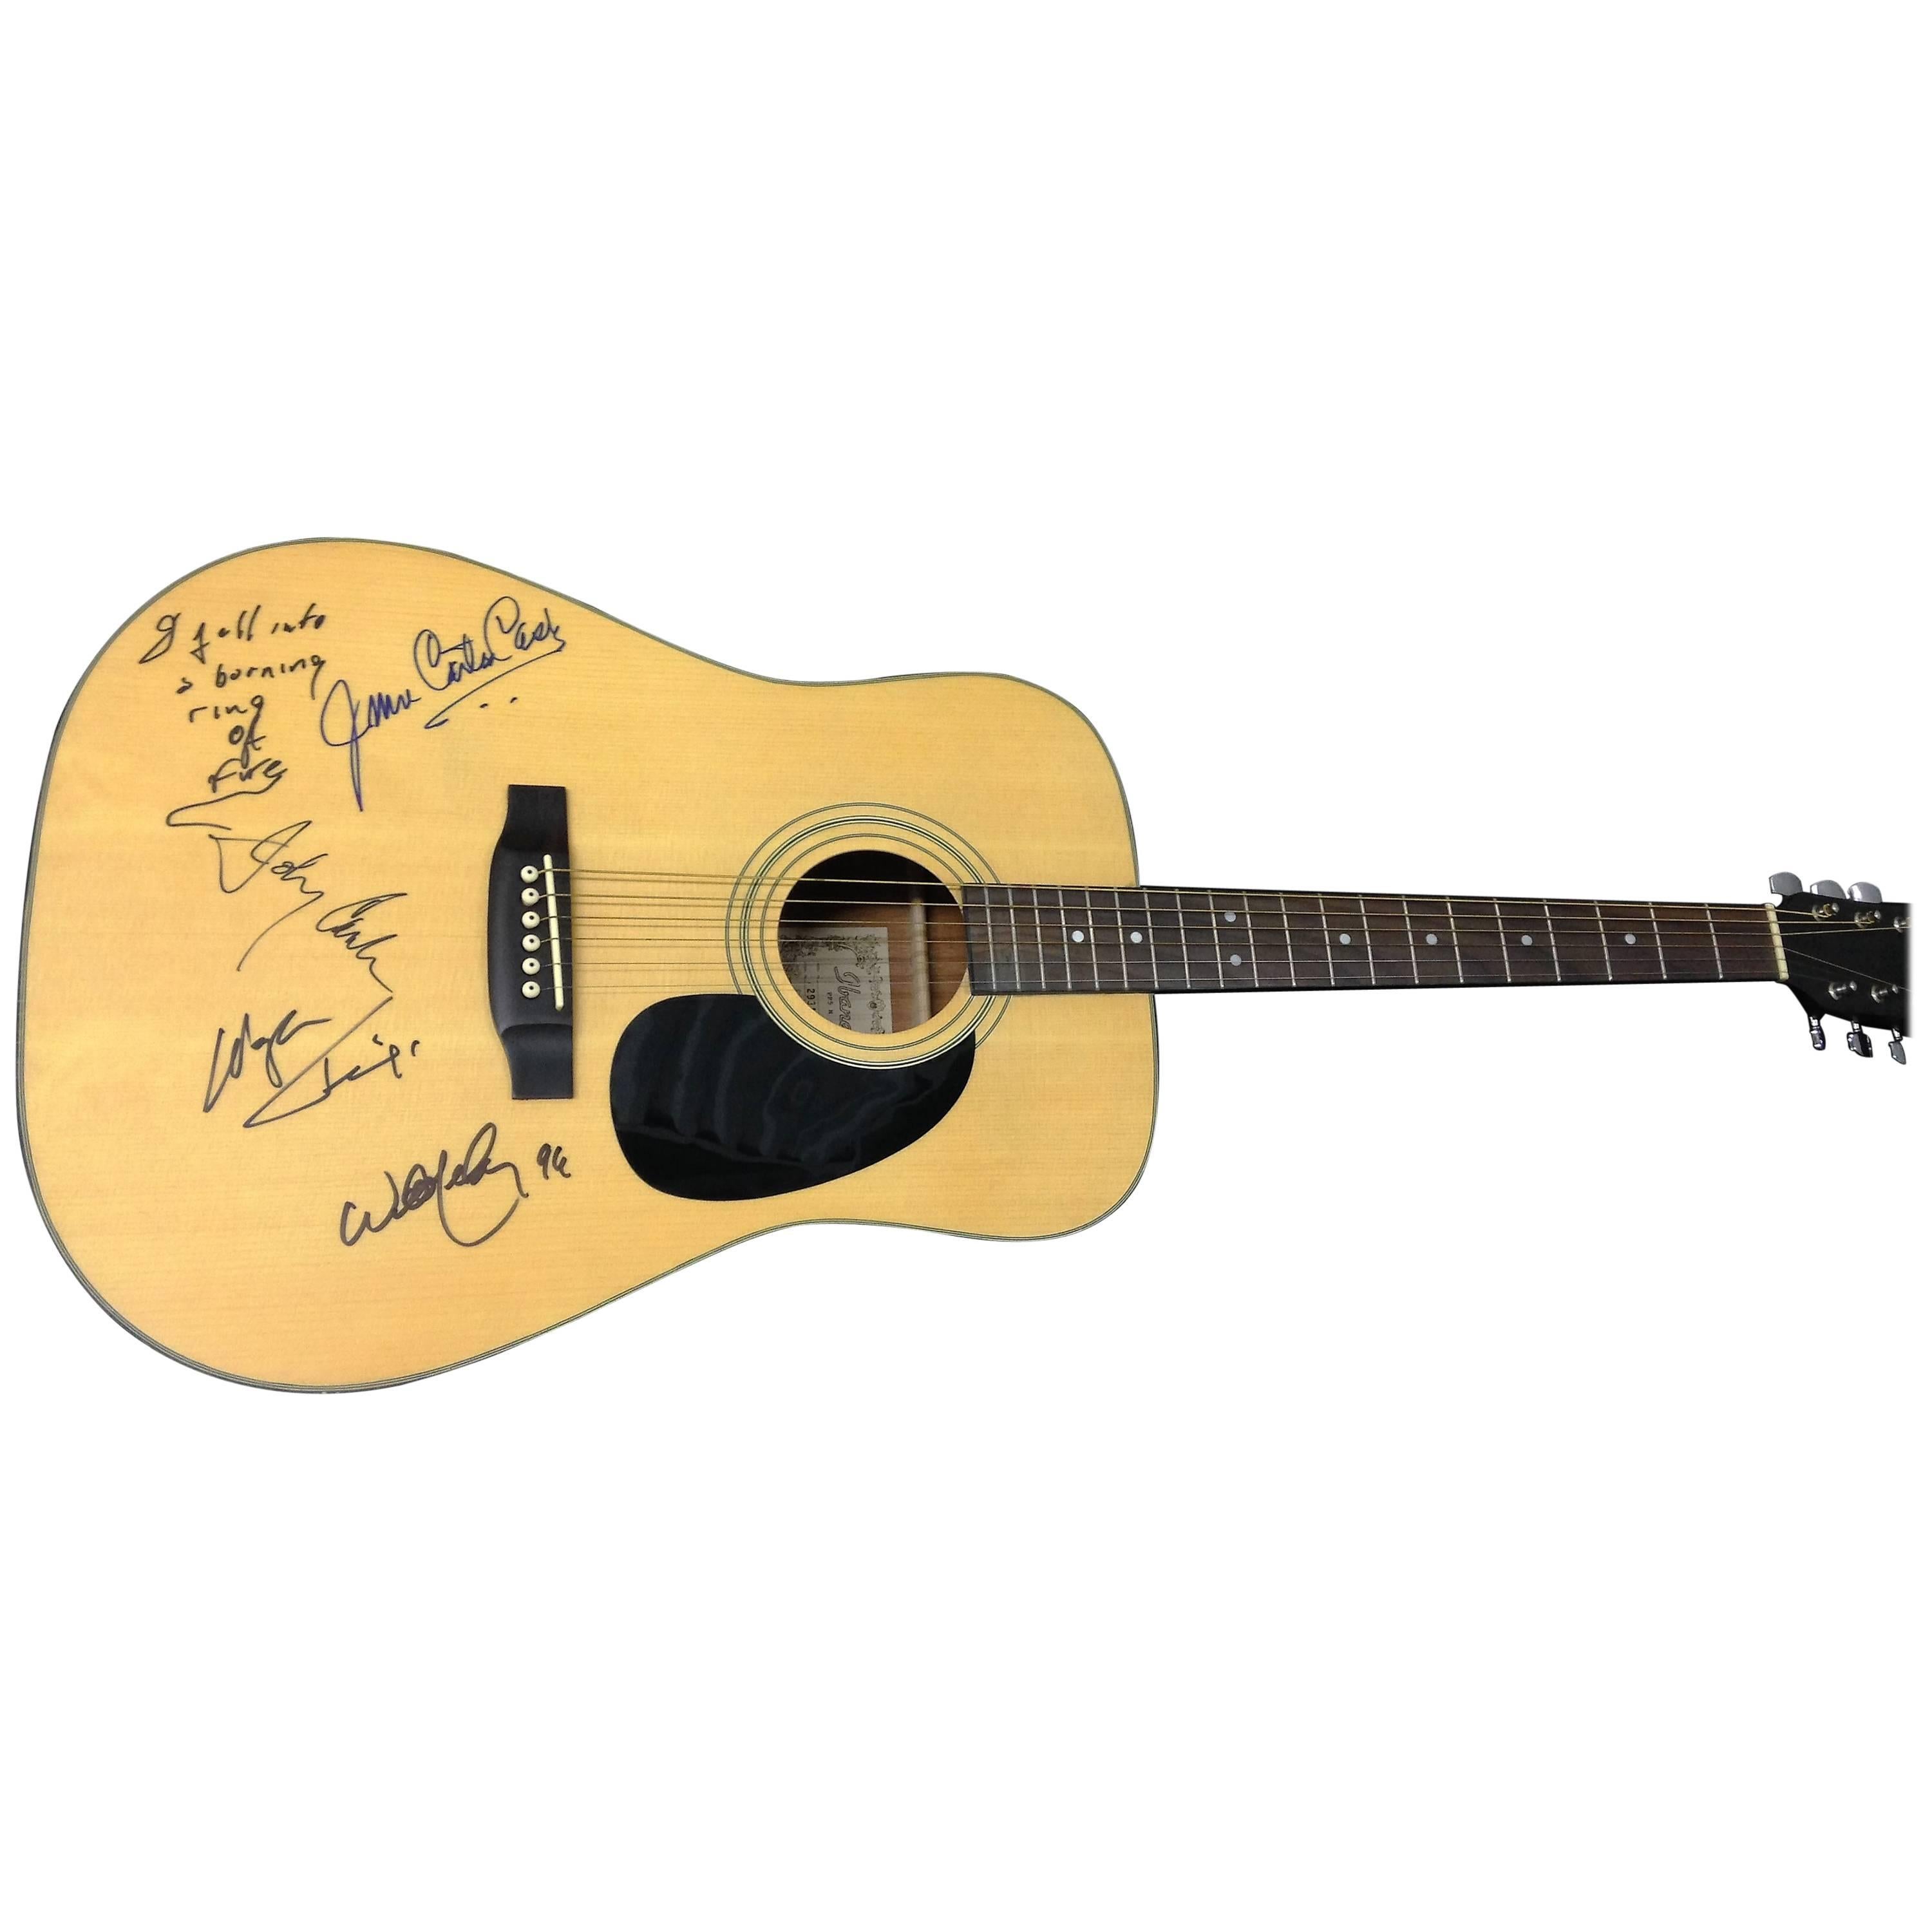 Johnny Cash and June Carter Cash Autographed Guitar For Sale